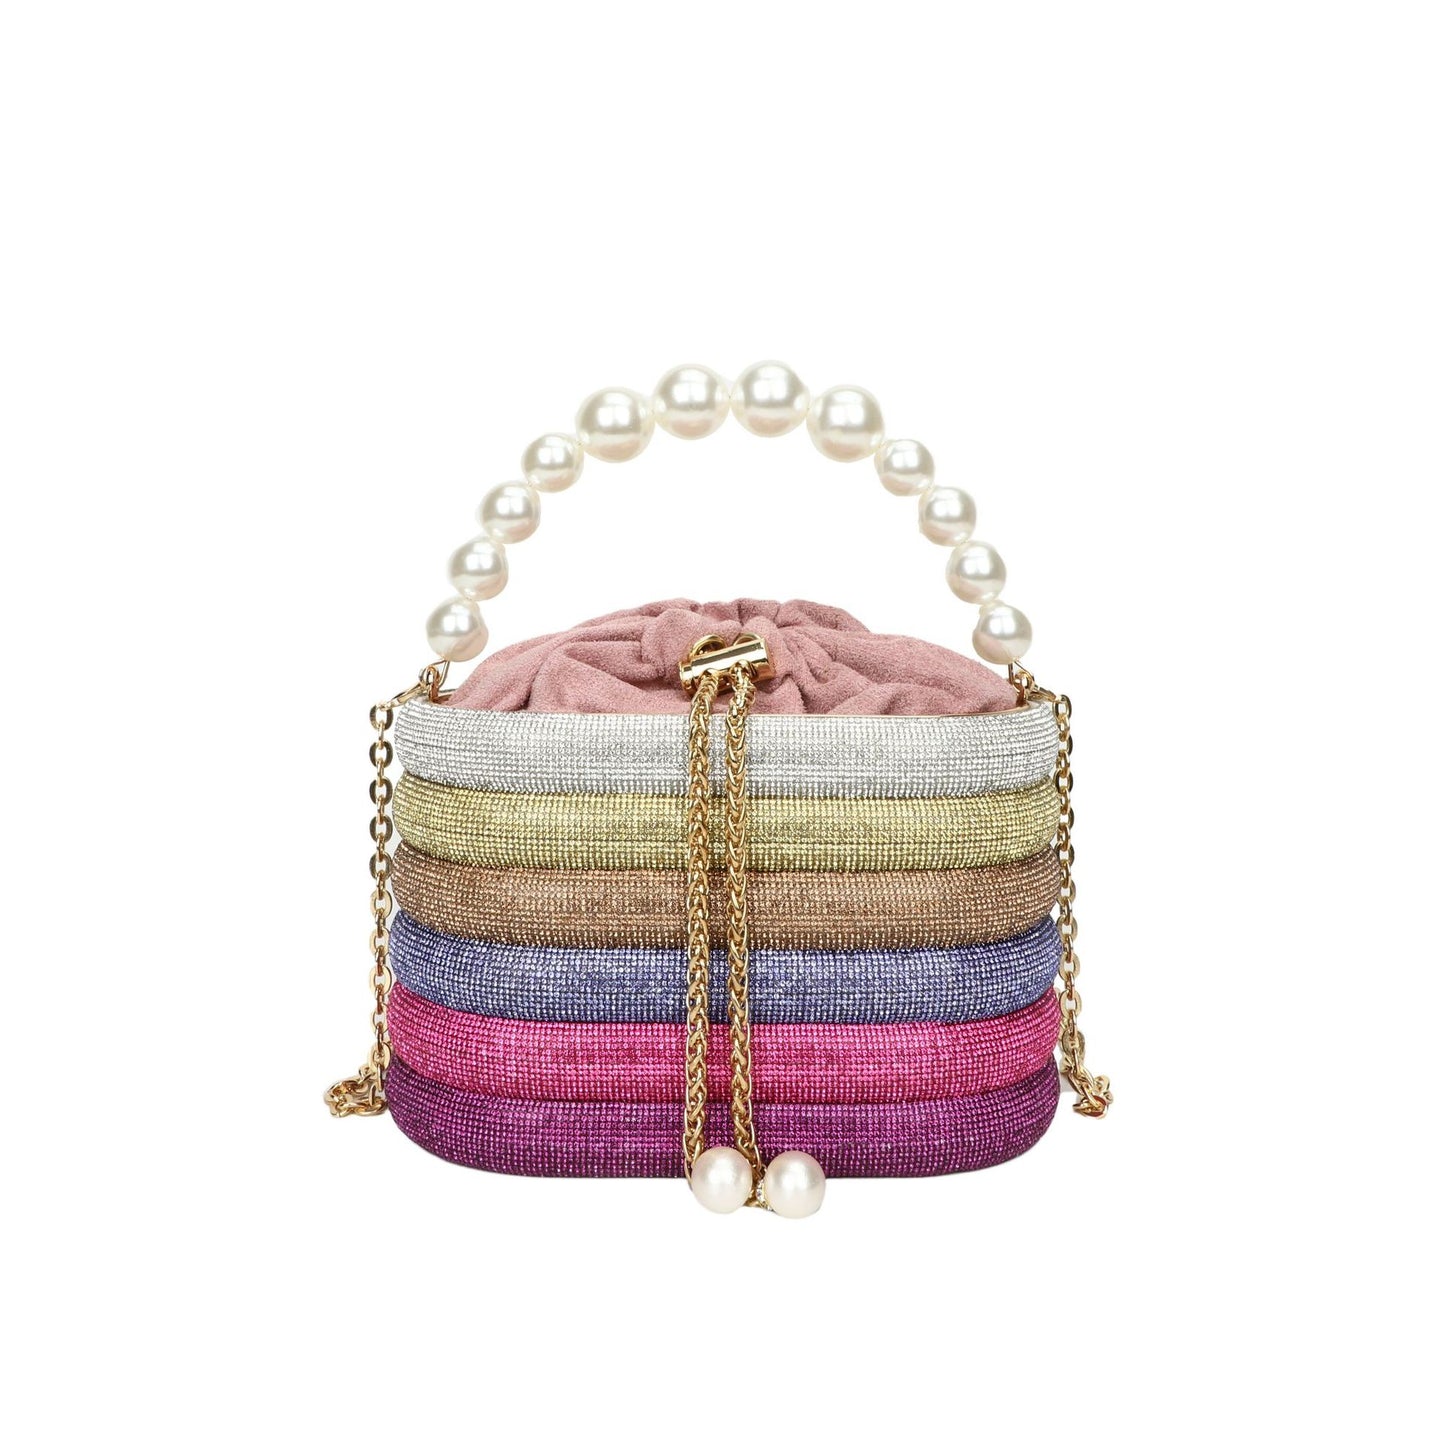 Judy- the Rainbow Stacked Rhinestone Handbag 4 Color Ways